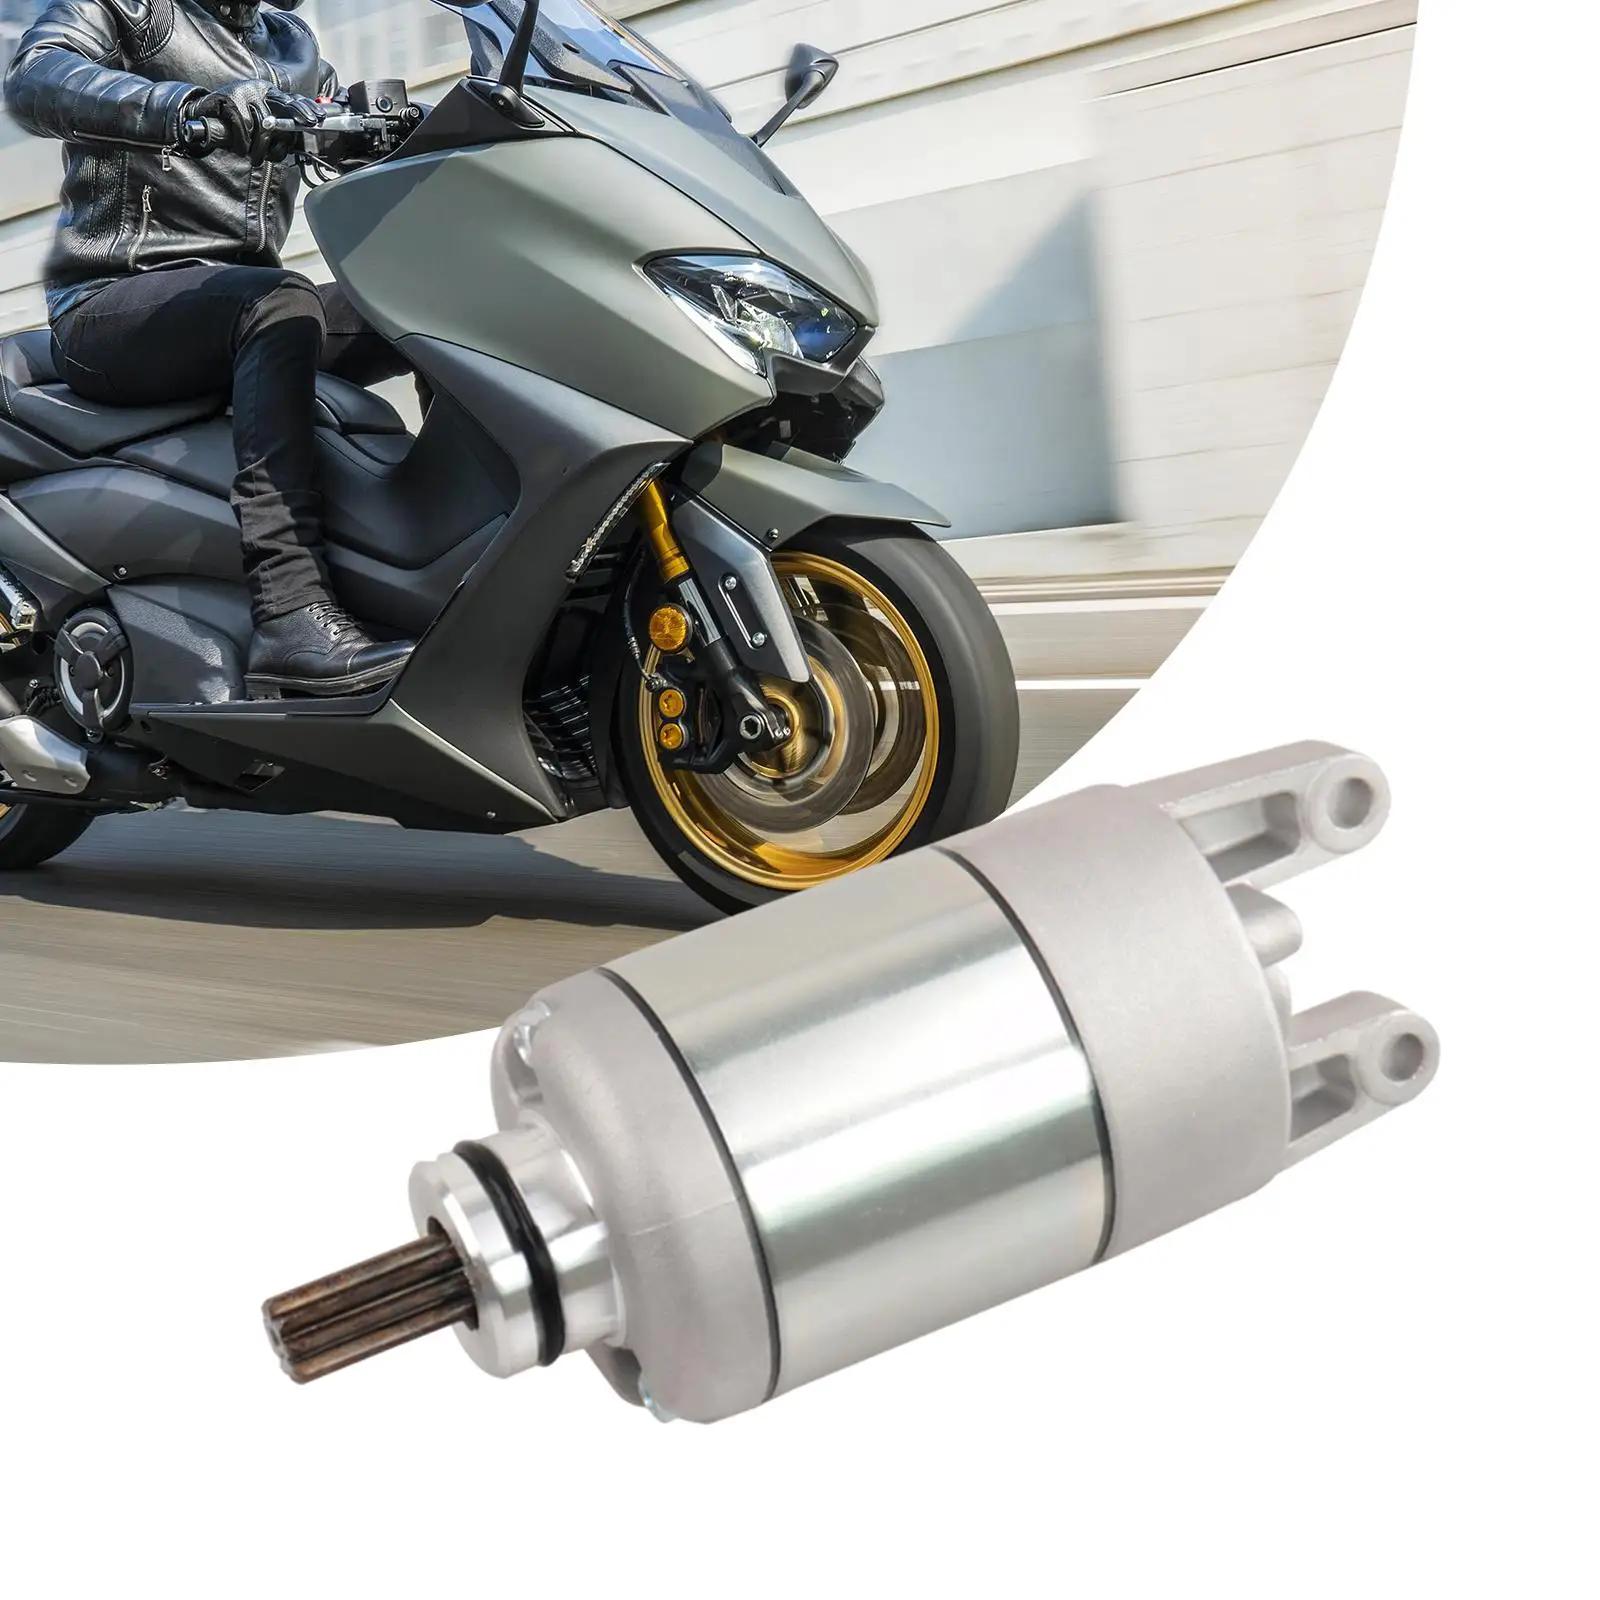 Motorcycle Starter Motor, B74-h1890-00-00 Easy Installation, High Performance